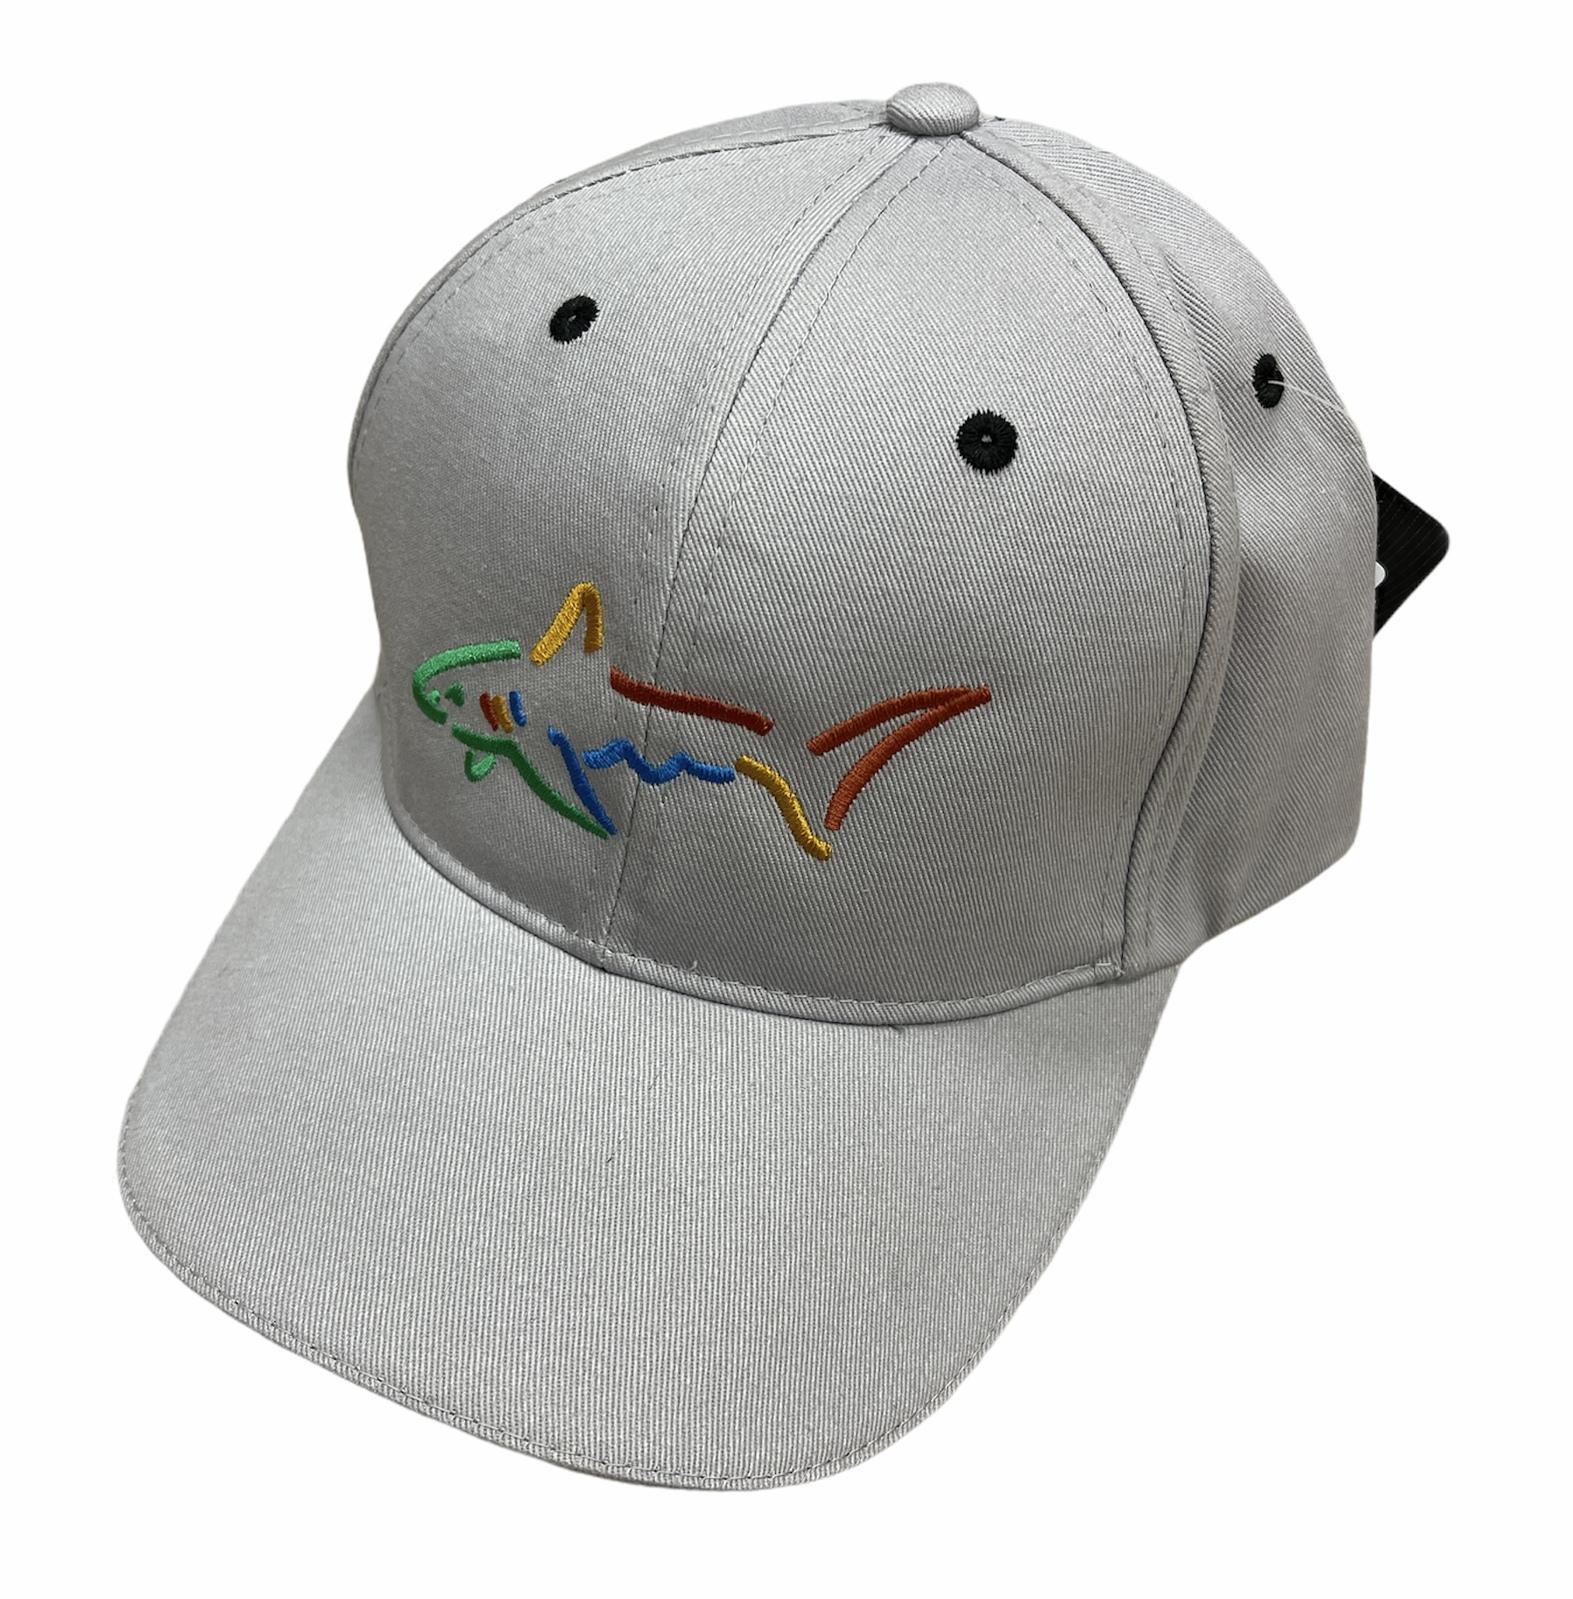 GREG NORMAN Cotton Golf Baseball Cap Hat Adjustable - One Size - Storm/Black/White